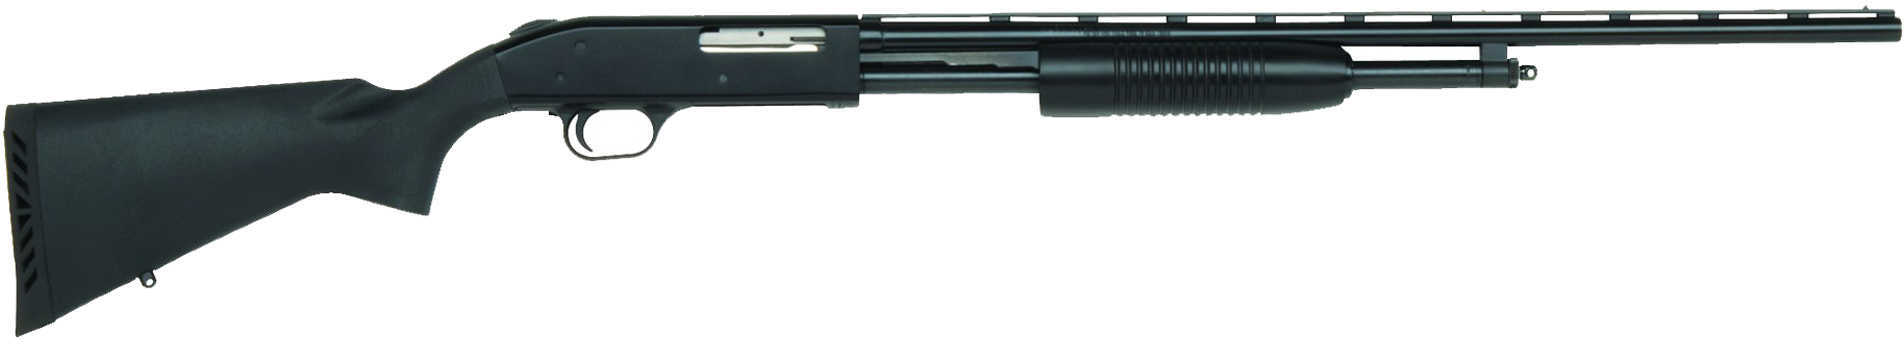 Mossberg 500 Pump Action Shotgun Bantam Field 410 Gauge 24" Barrel Blued Finish Synthetic Stock Full Choke Fixed Sights Factory-Ported 50112